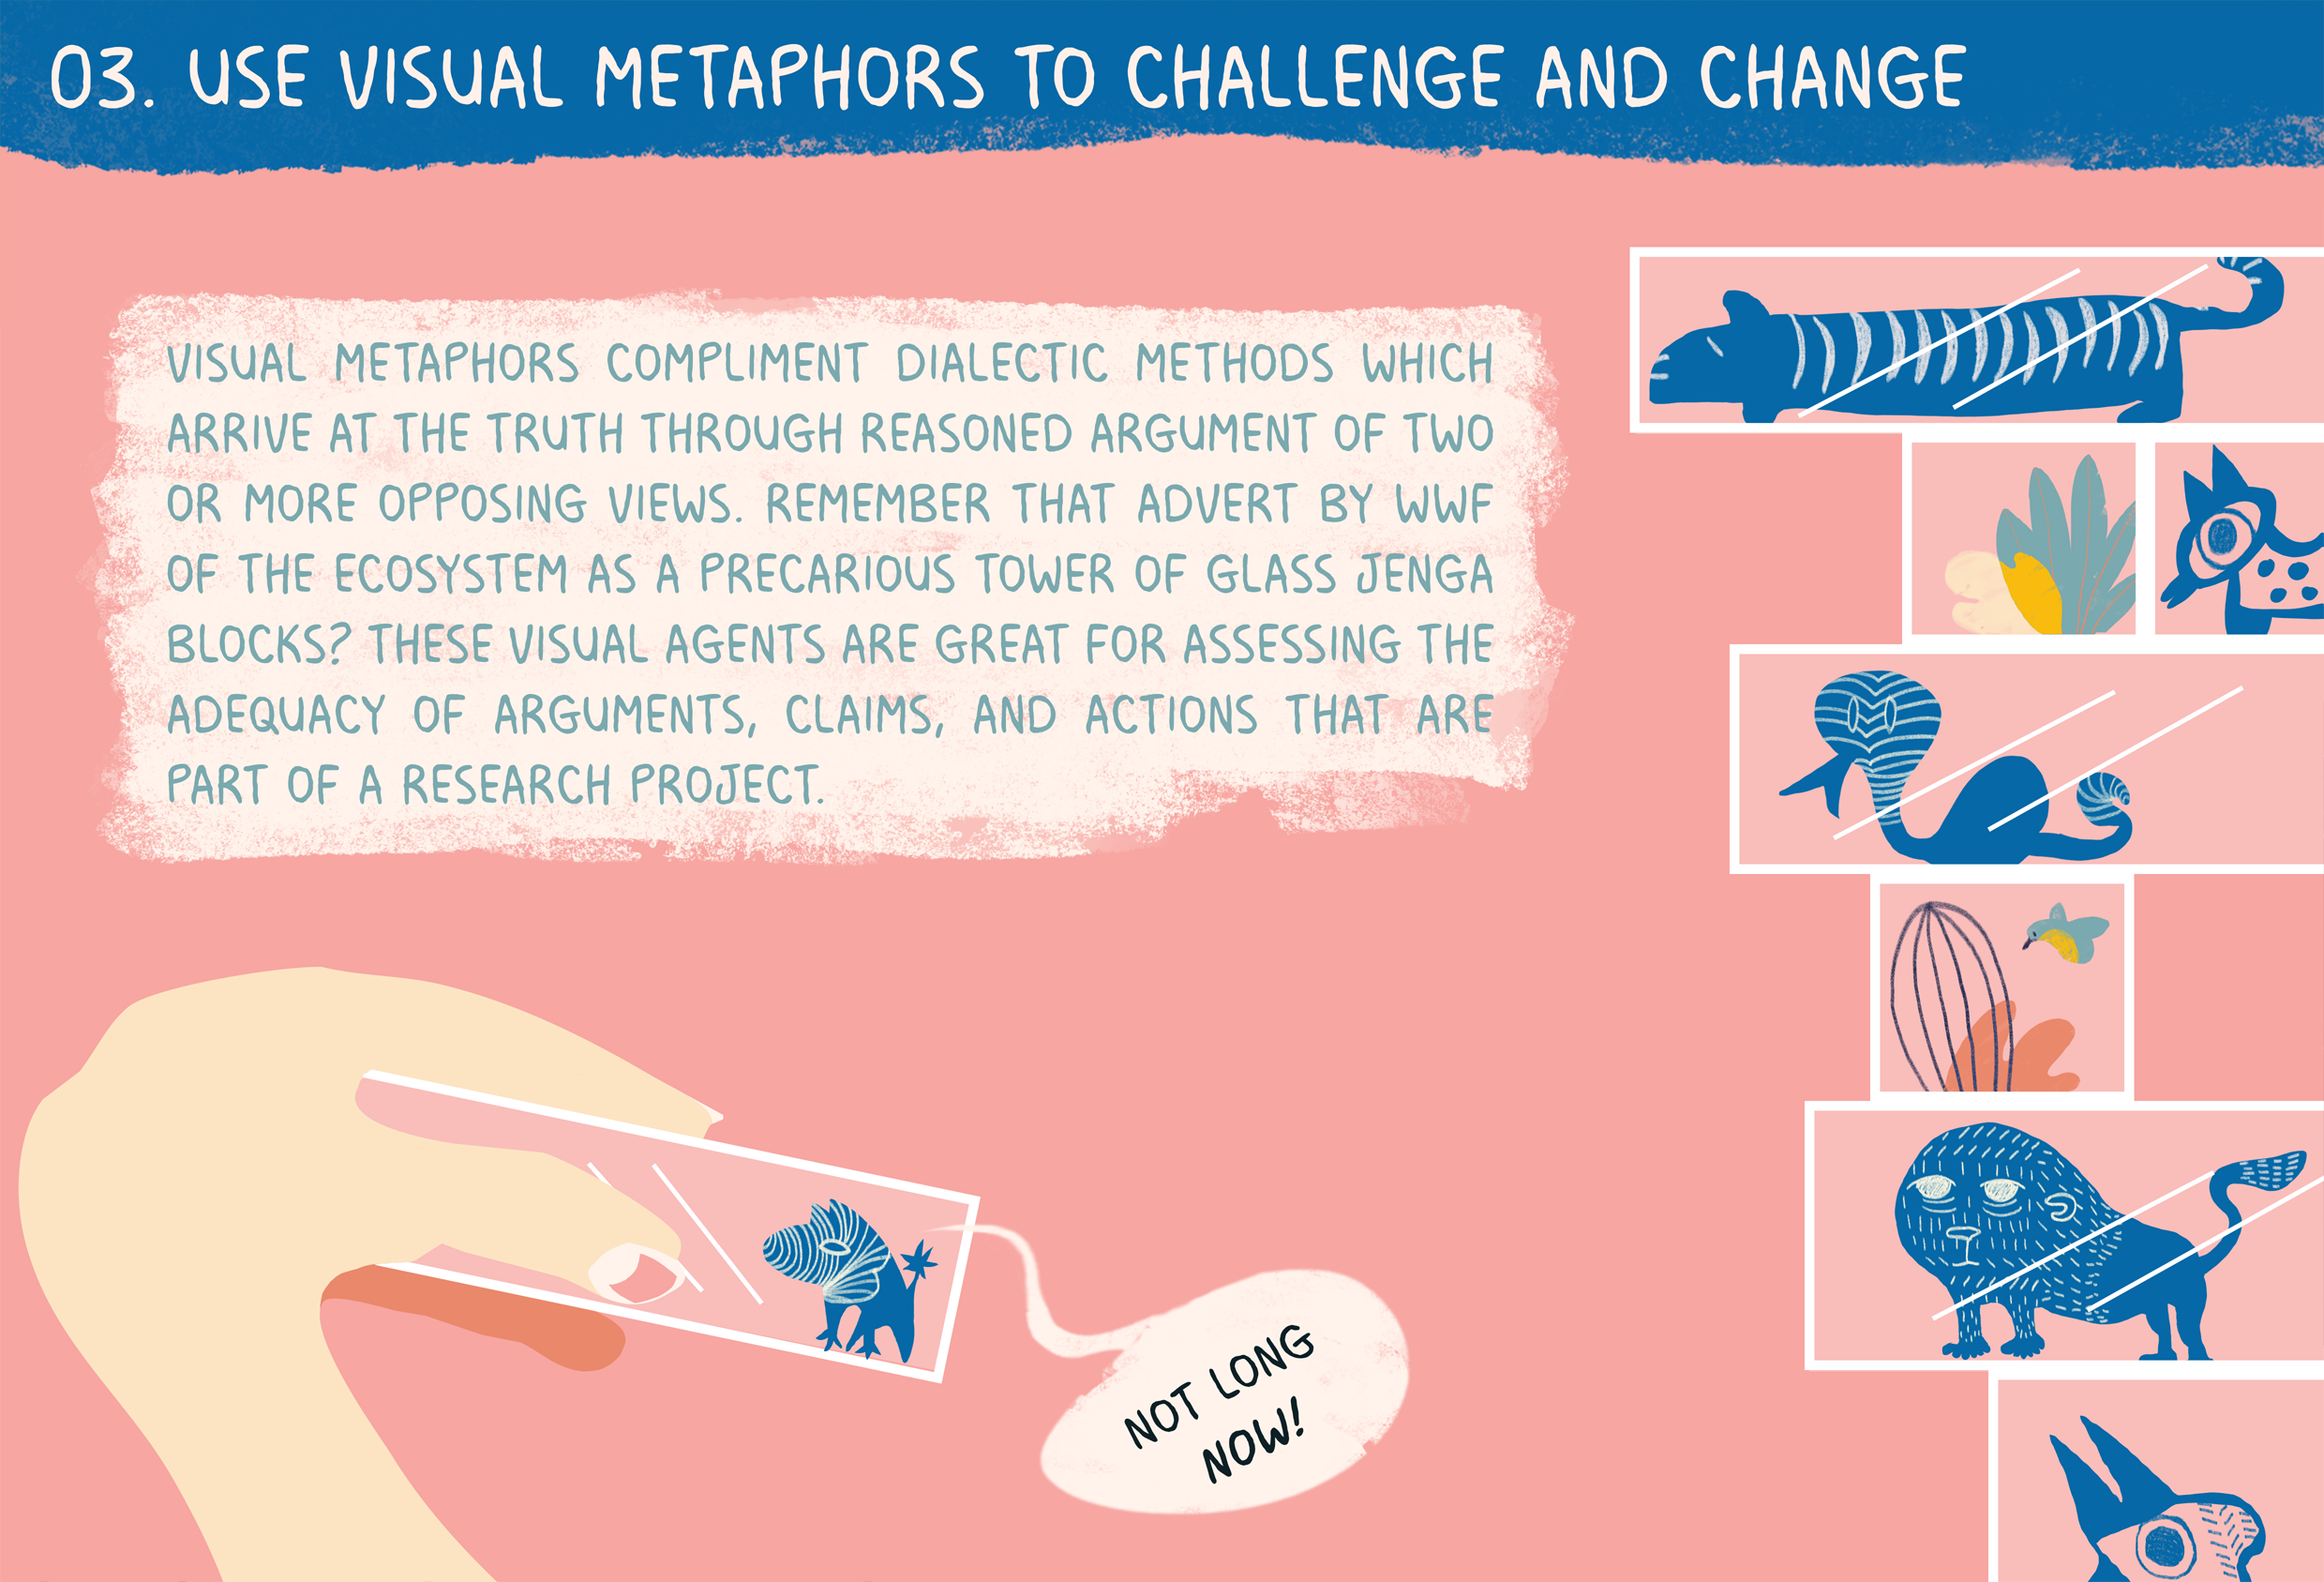 Use visual metaphors to challenge and change.